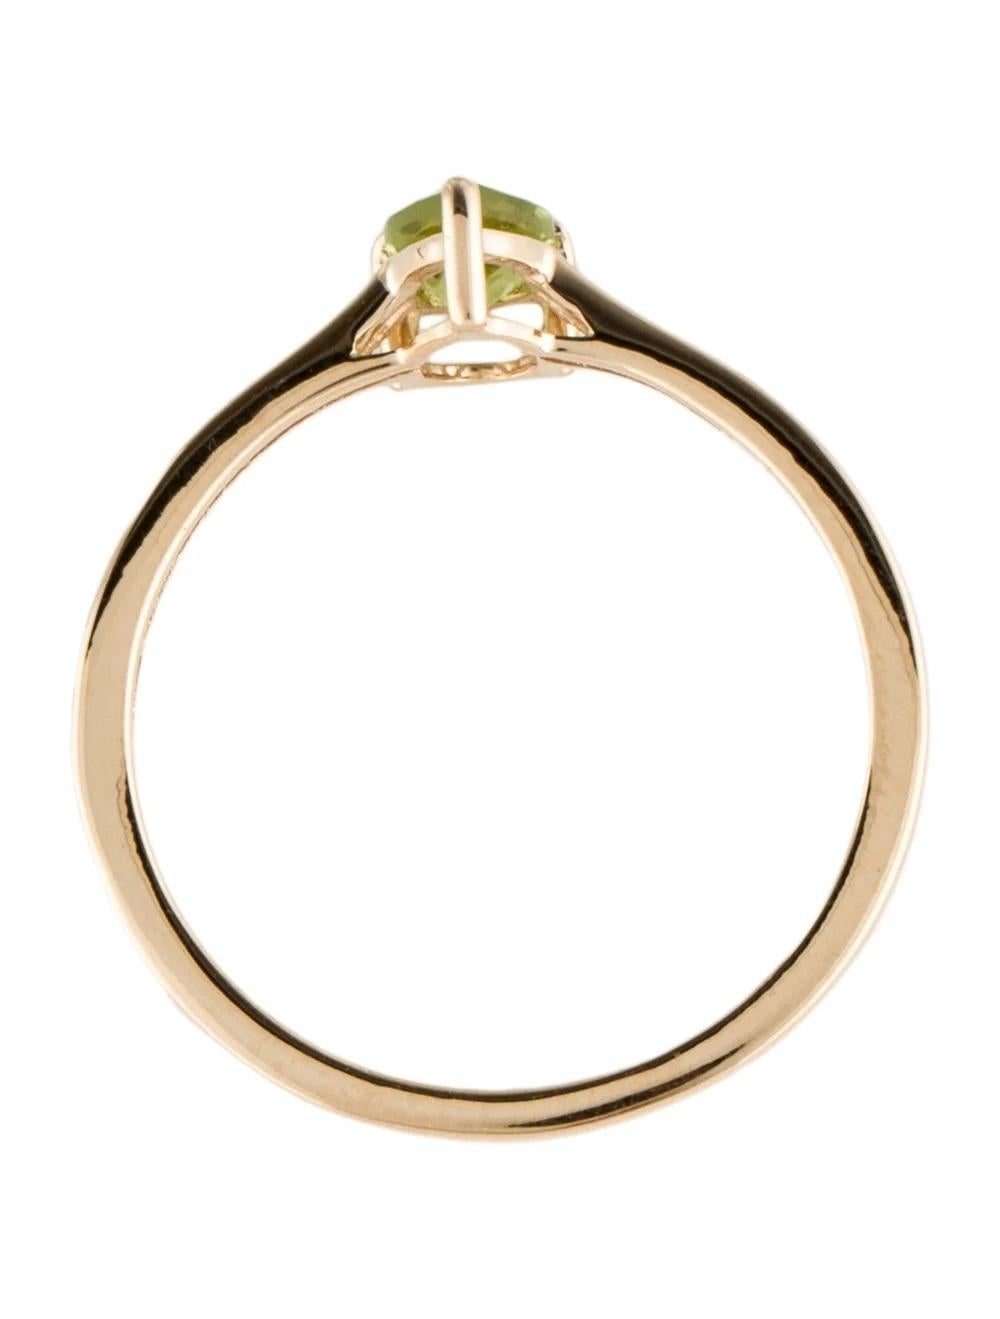 Women's 14K Peridot Cocktail Ring, Size 6.75 - Green Gemstone Statement Piece, Elegant For Sale